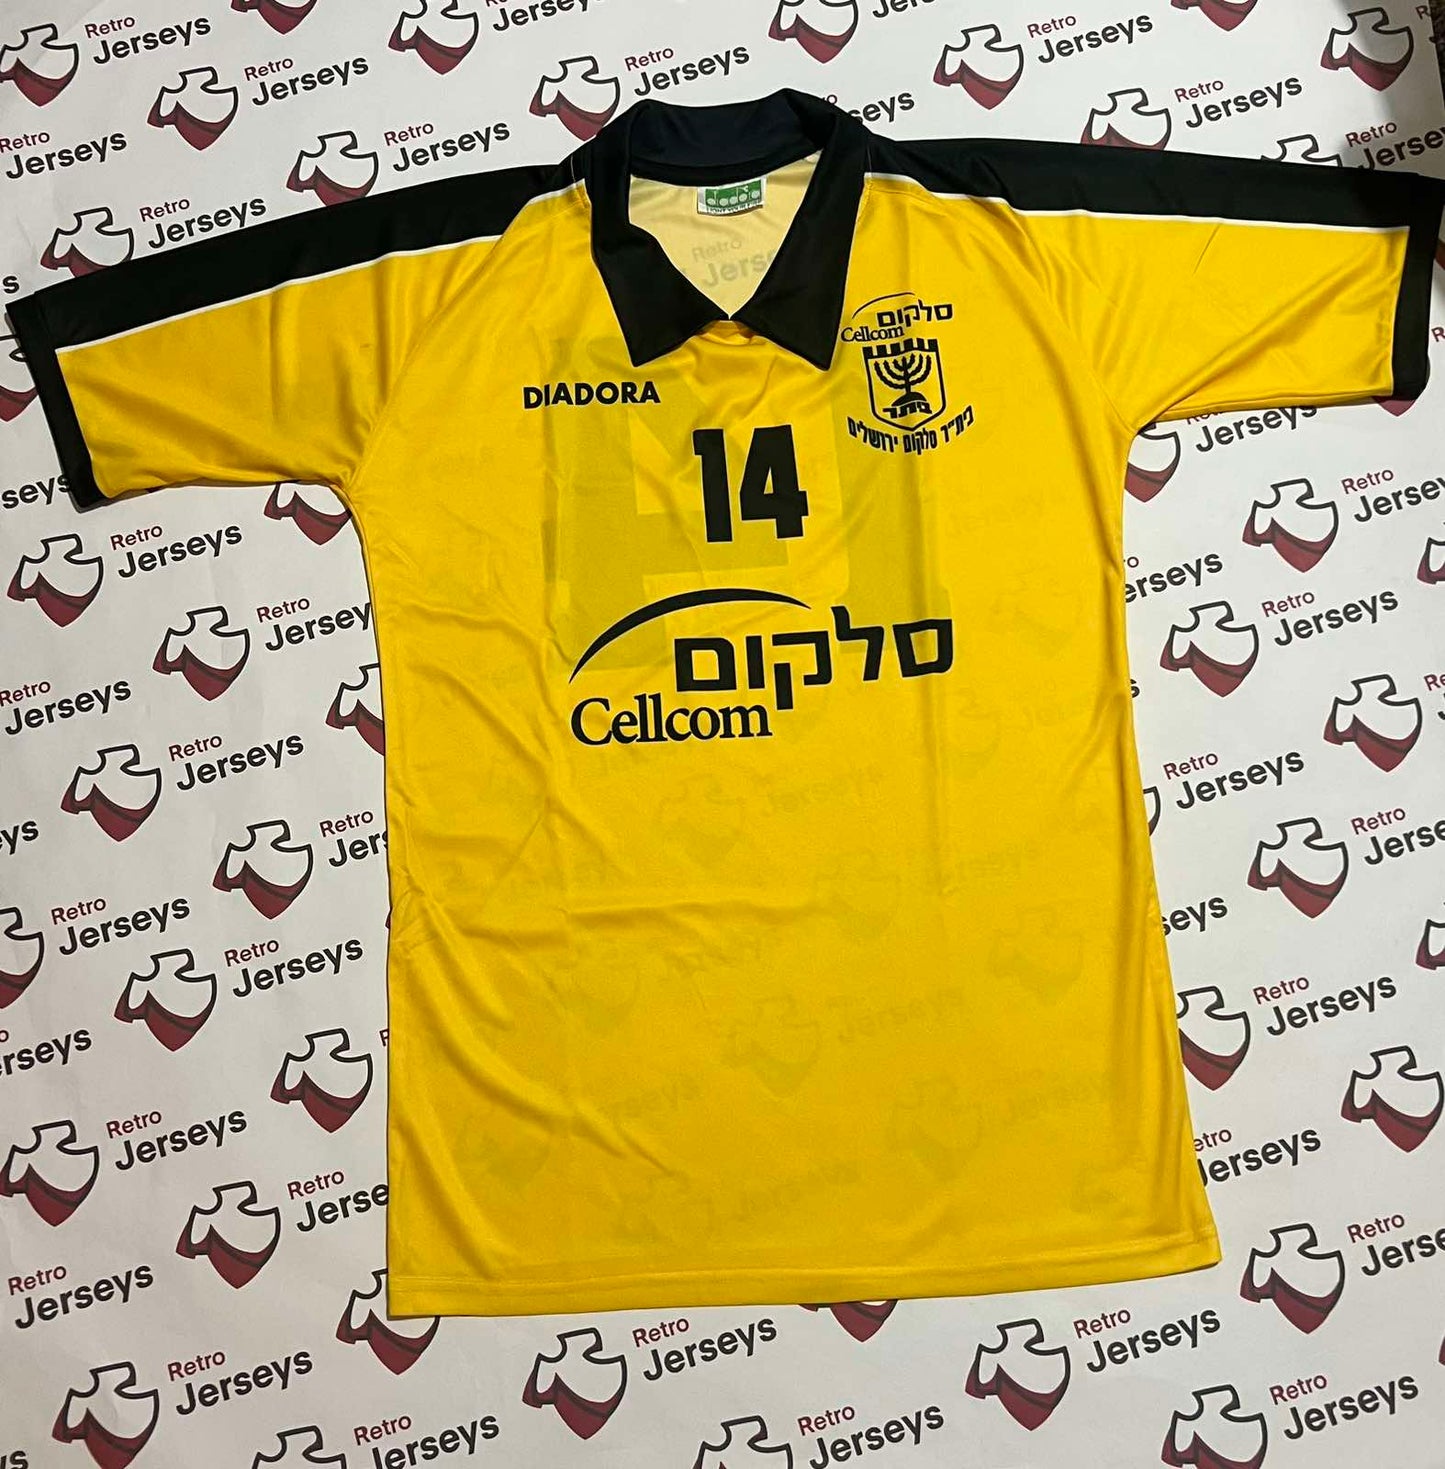 Beitar Jerusalem 1/10/1998 Shirt vs Glasgow Rangers - Retro Jerseys - Retro Jerseys